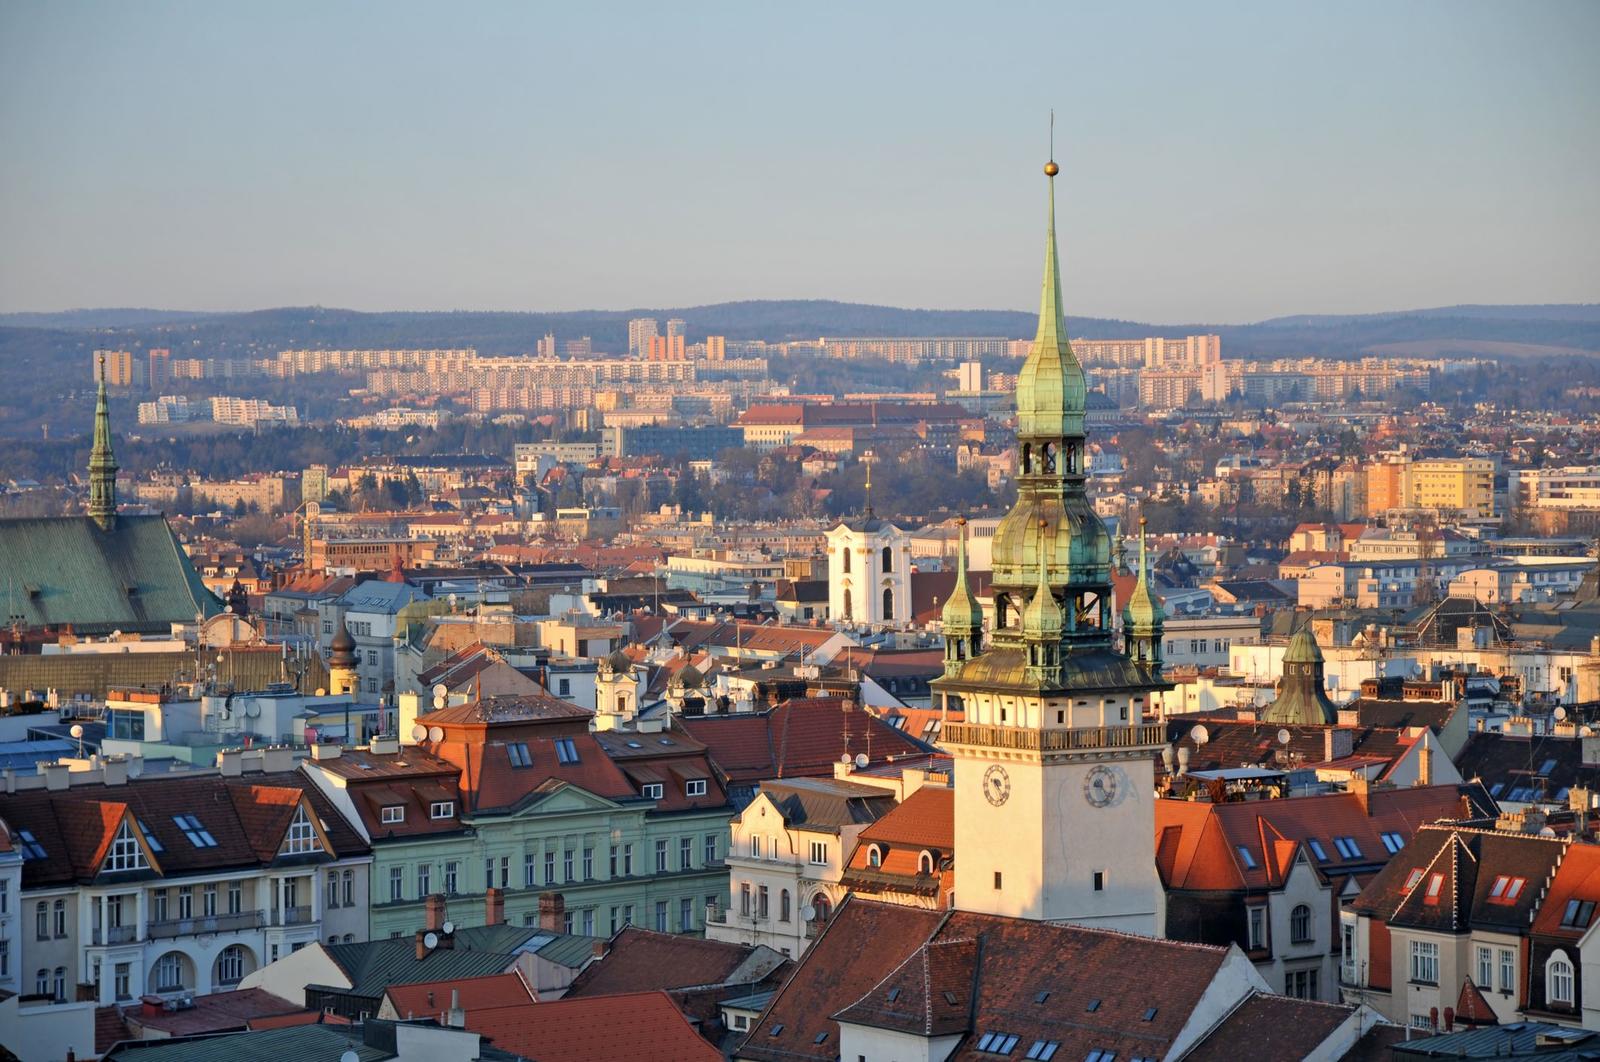 Brno skyline focus on Old Town Hall